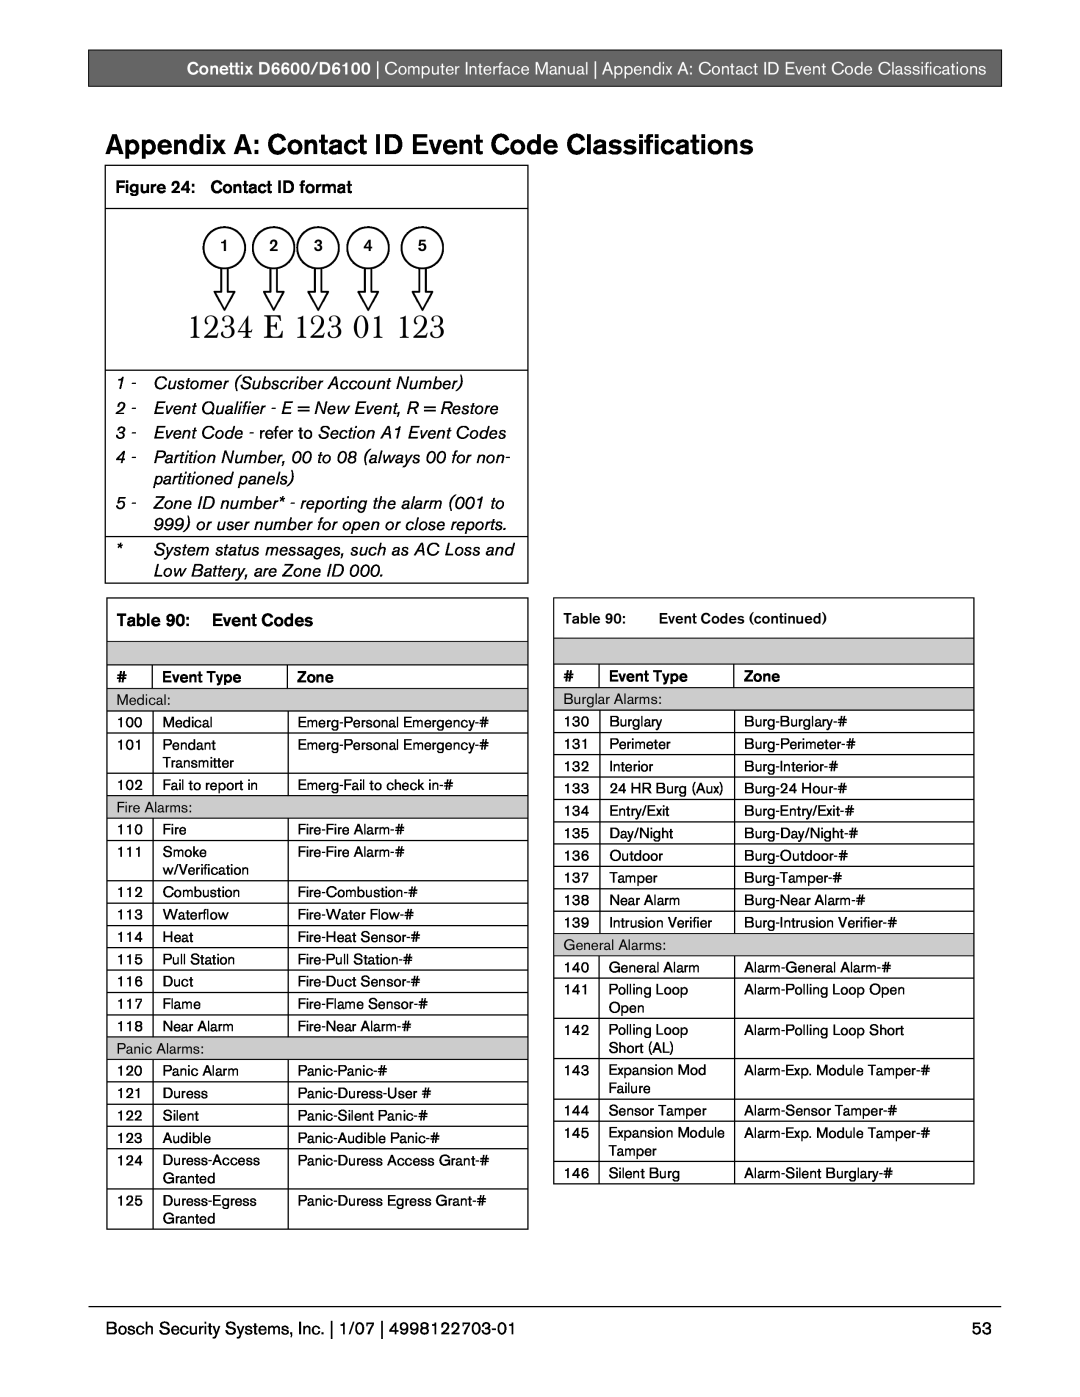 Bosch Appliances D6100 Appendix A Contact ID Event Code Classifications, Contact ID format, 1 2 3, partitioned panels 